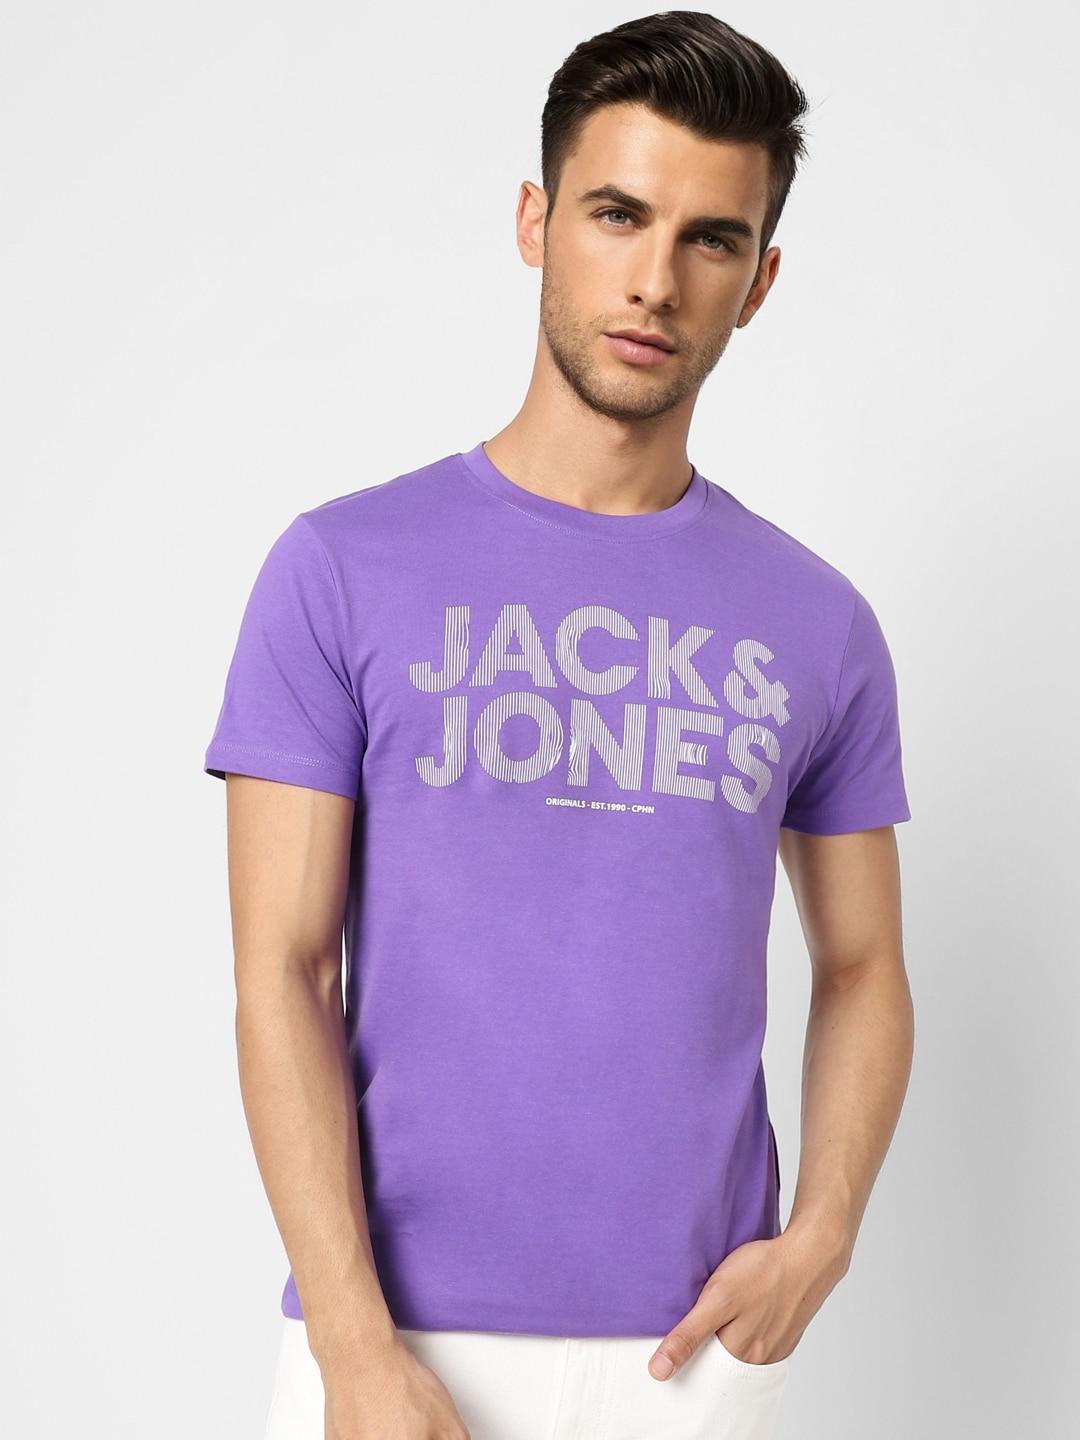 jack & jones men purple & white brand logo printed pure cotton slim fit t-shirt